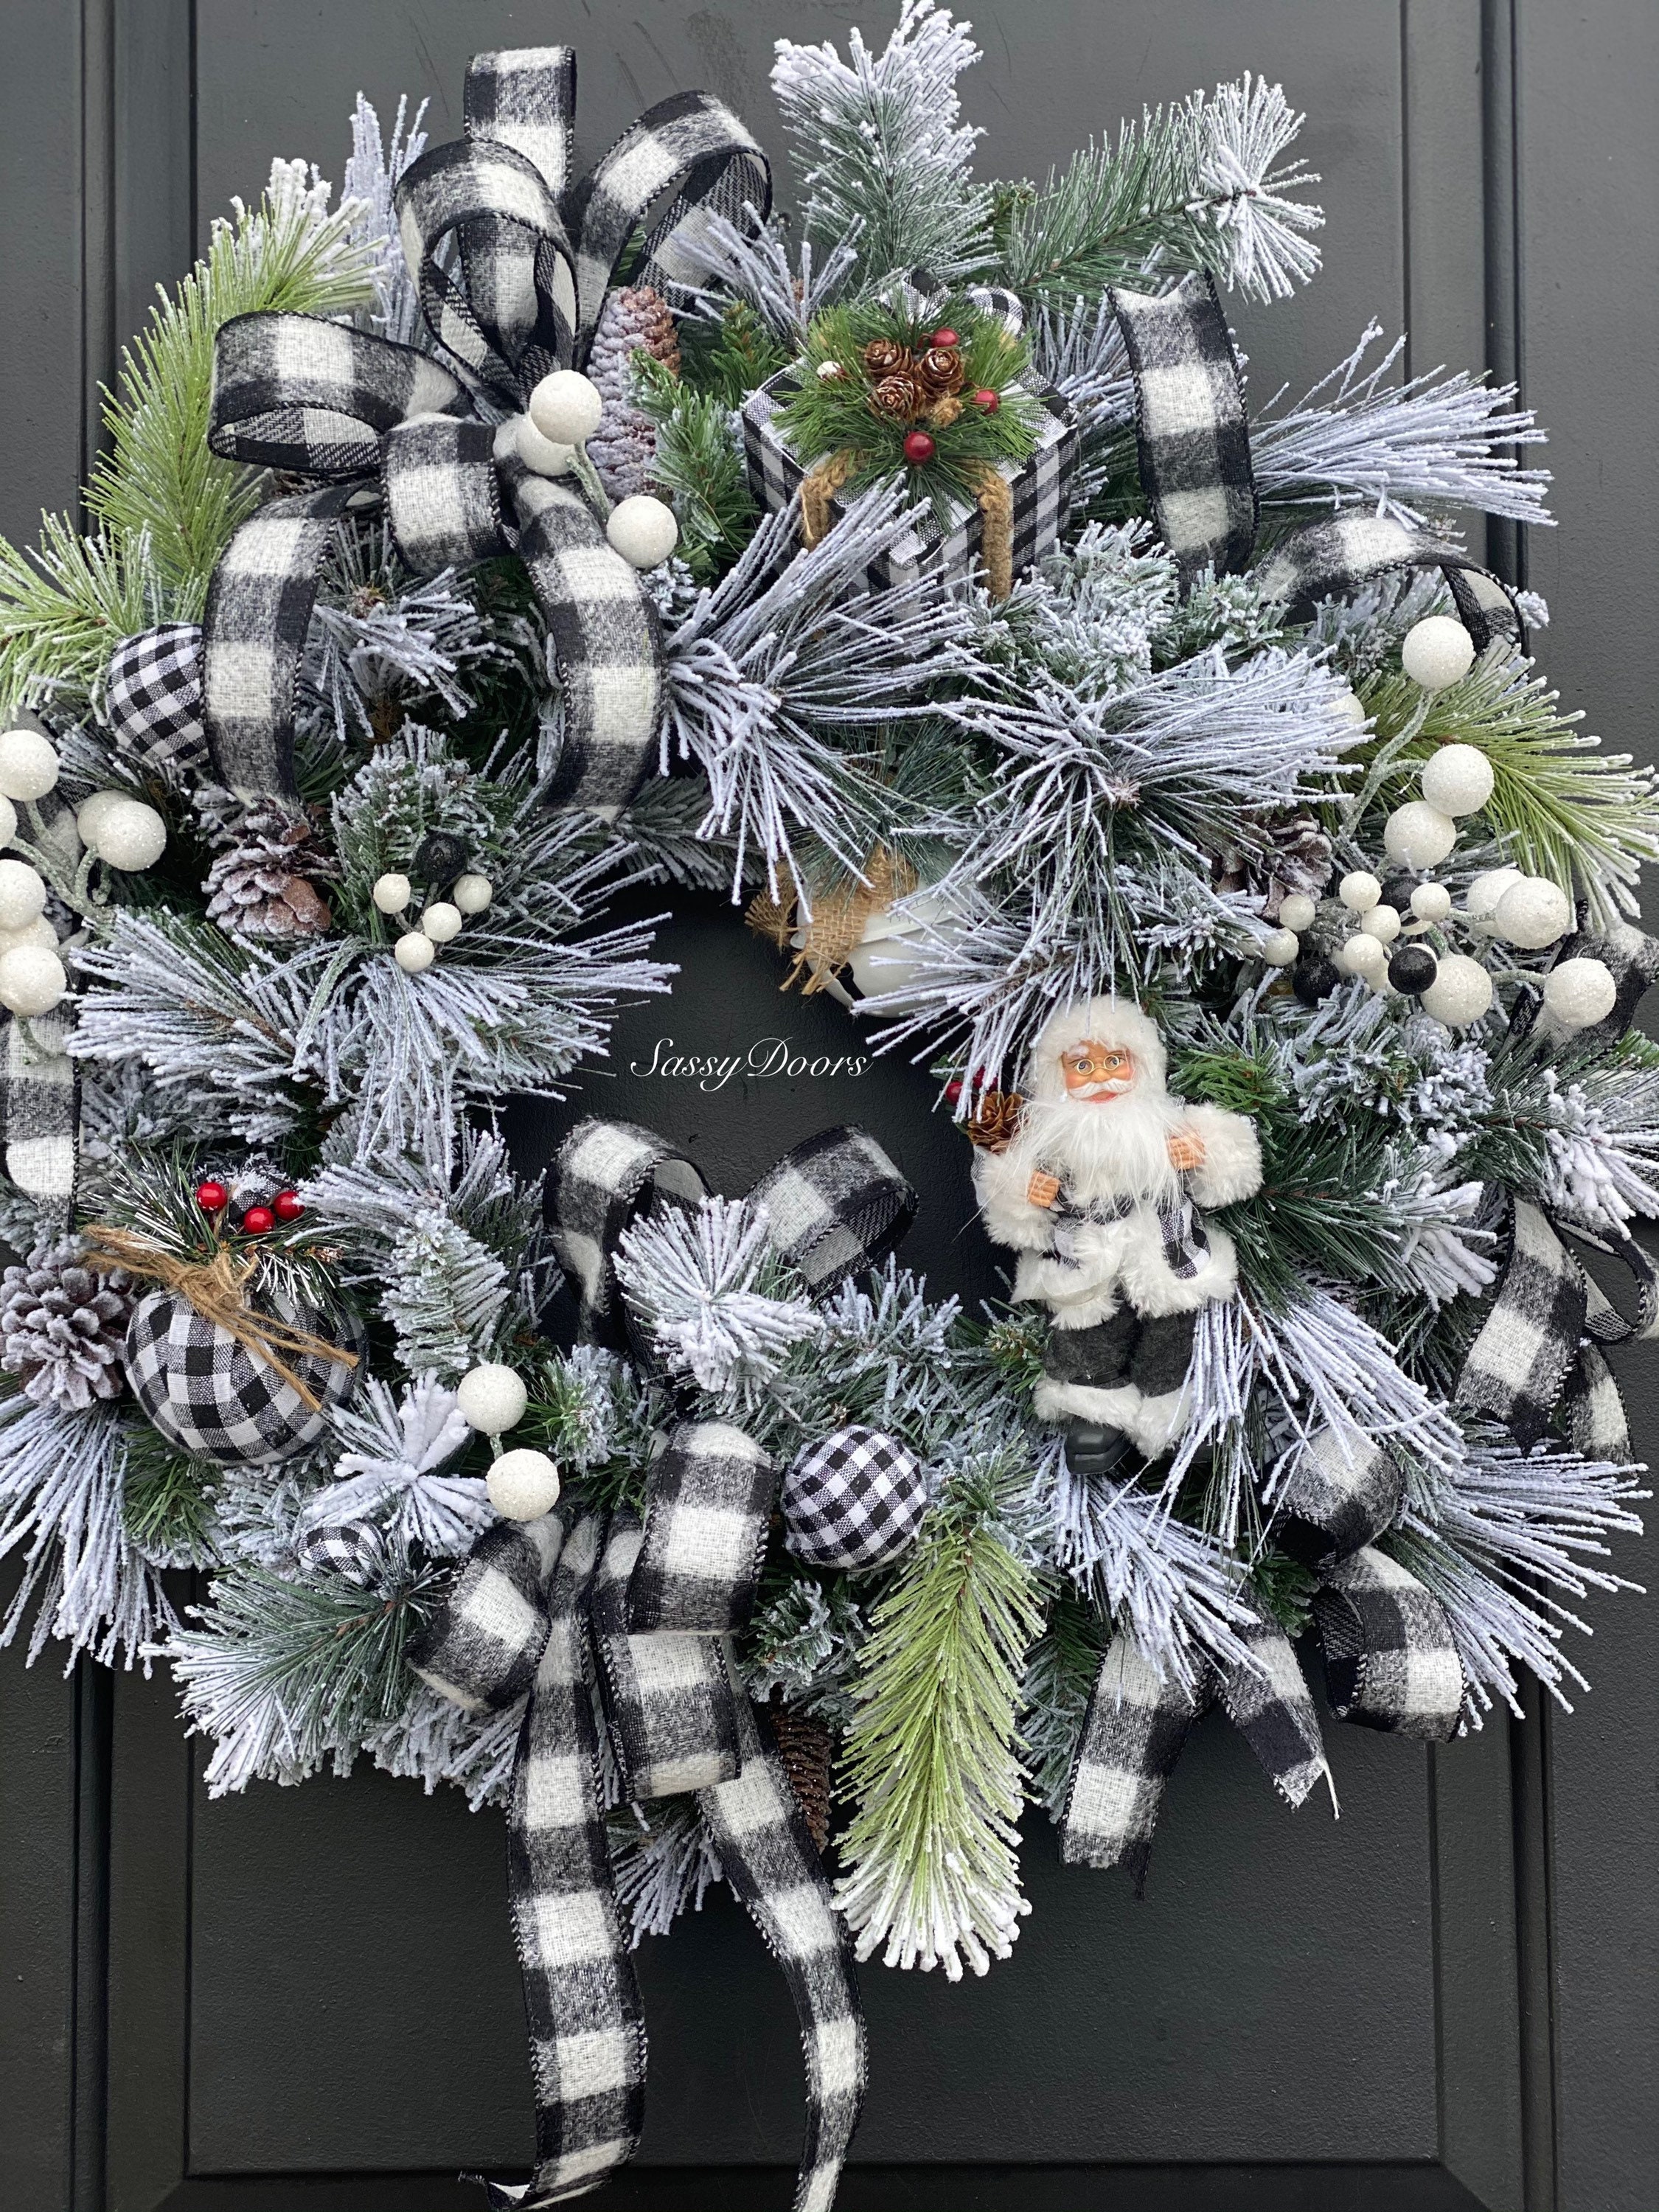  Christmas Wreath for Front Door,Black White Buffalo